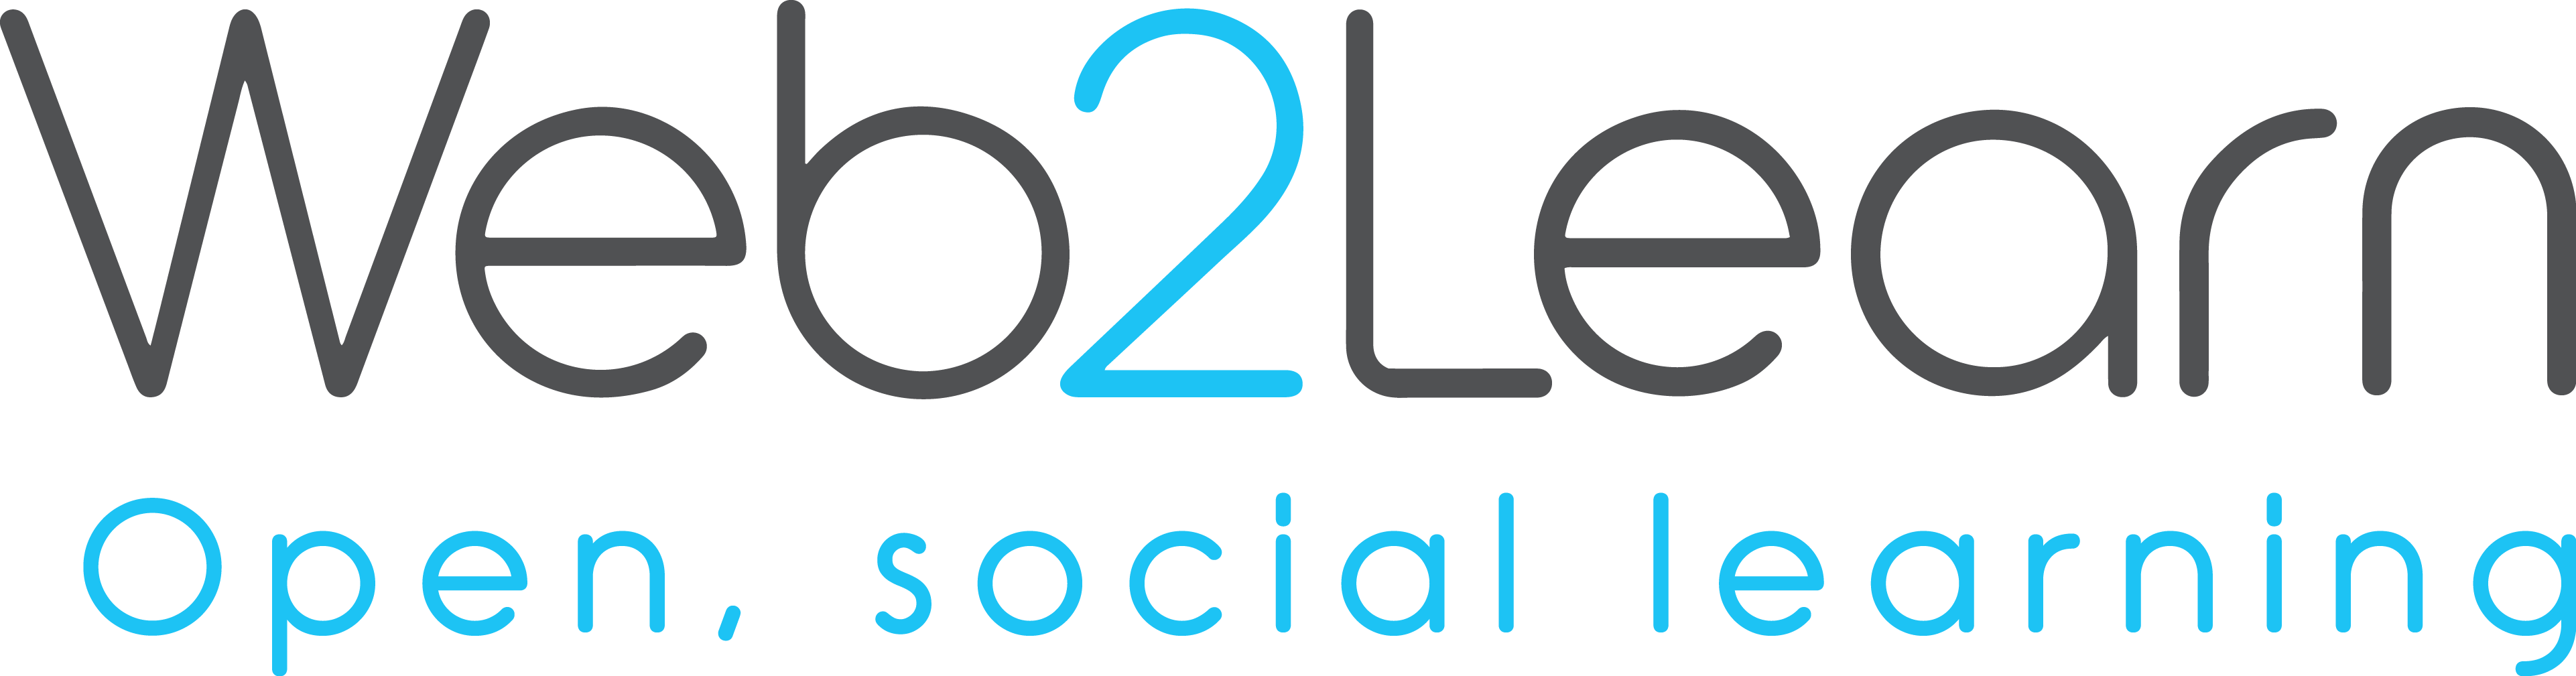 Web2learn-logo-2021-transparent.png